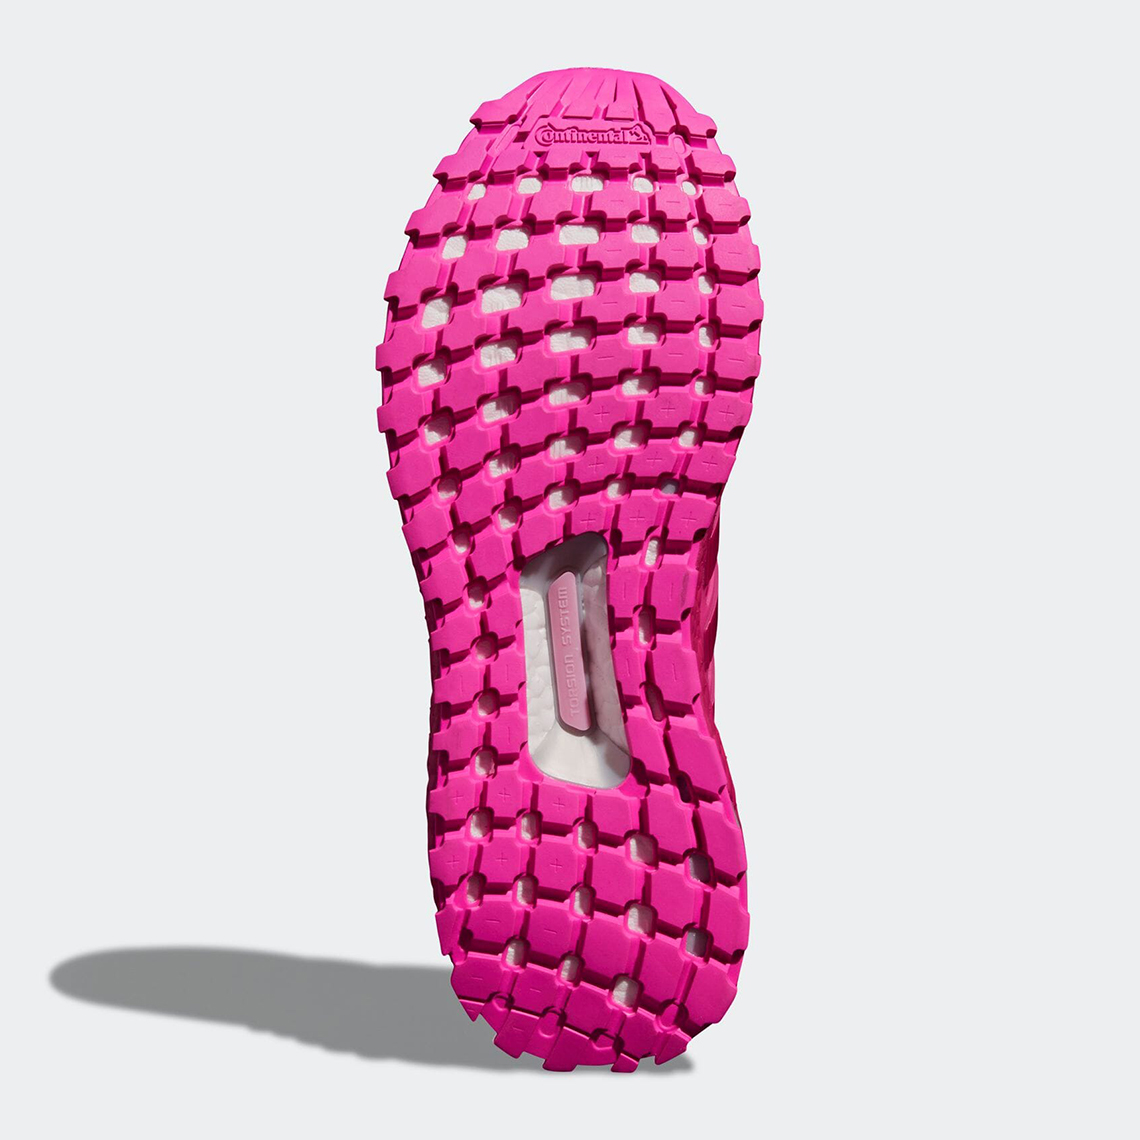 Beyonce Ivy Park Sneakers adidas Ultraboost Og Pink 8